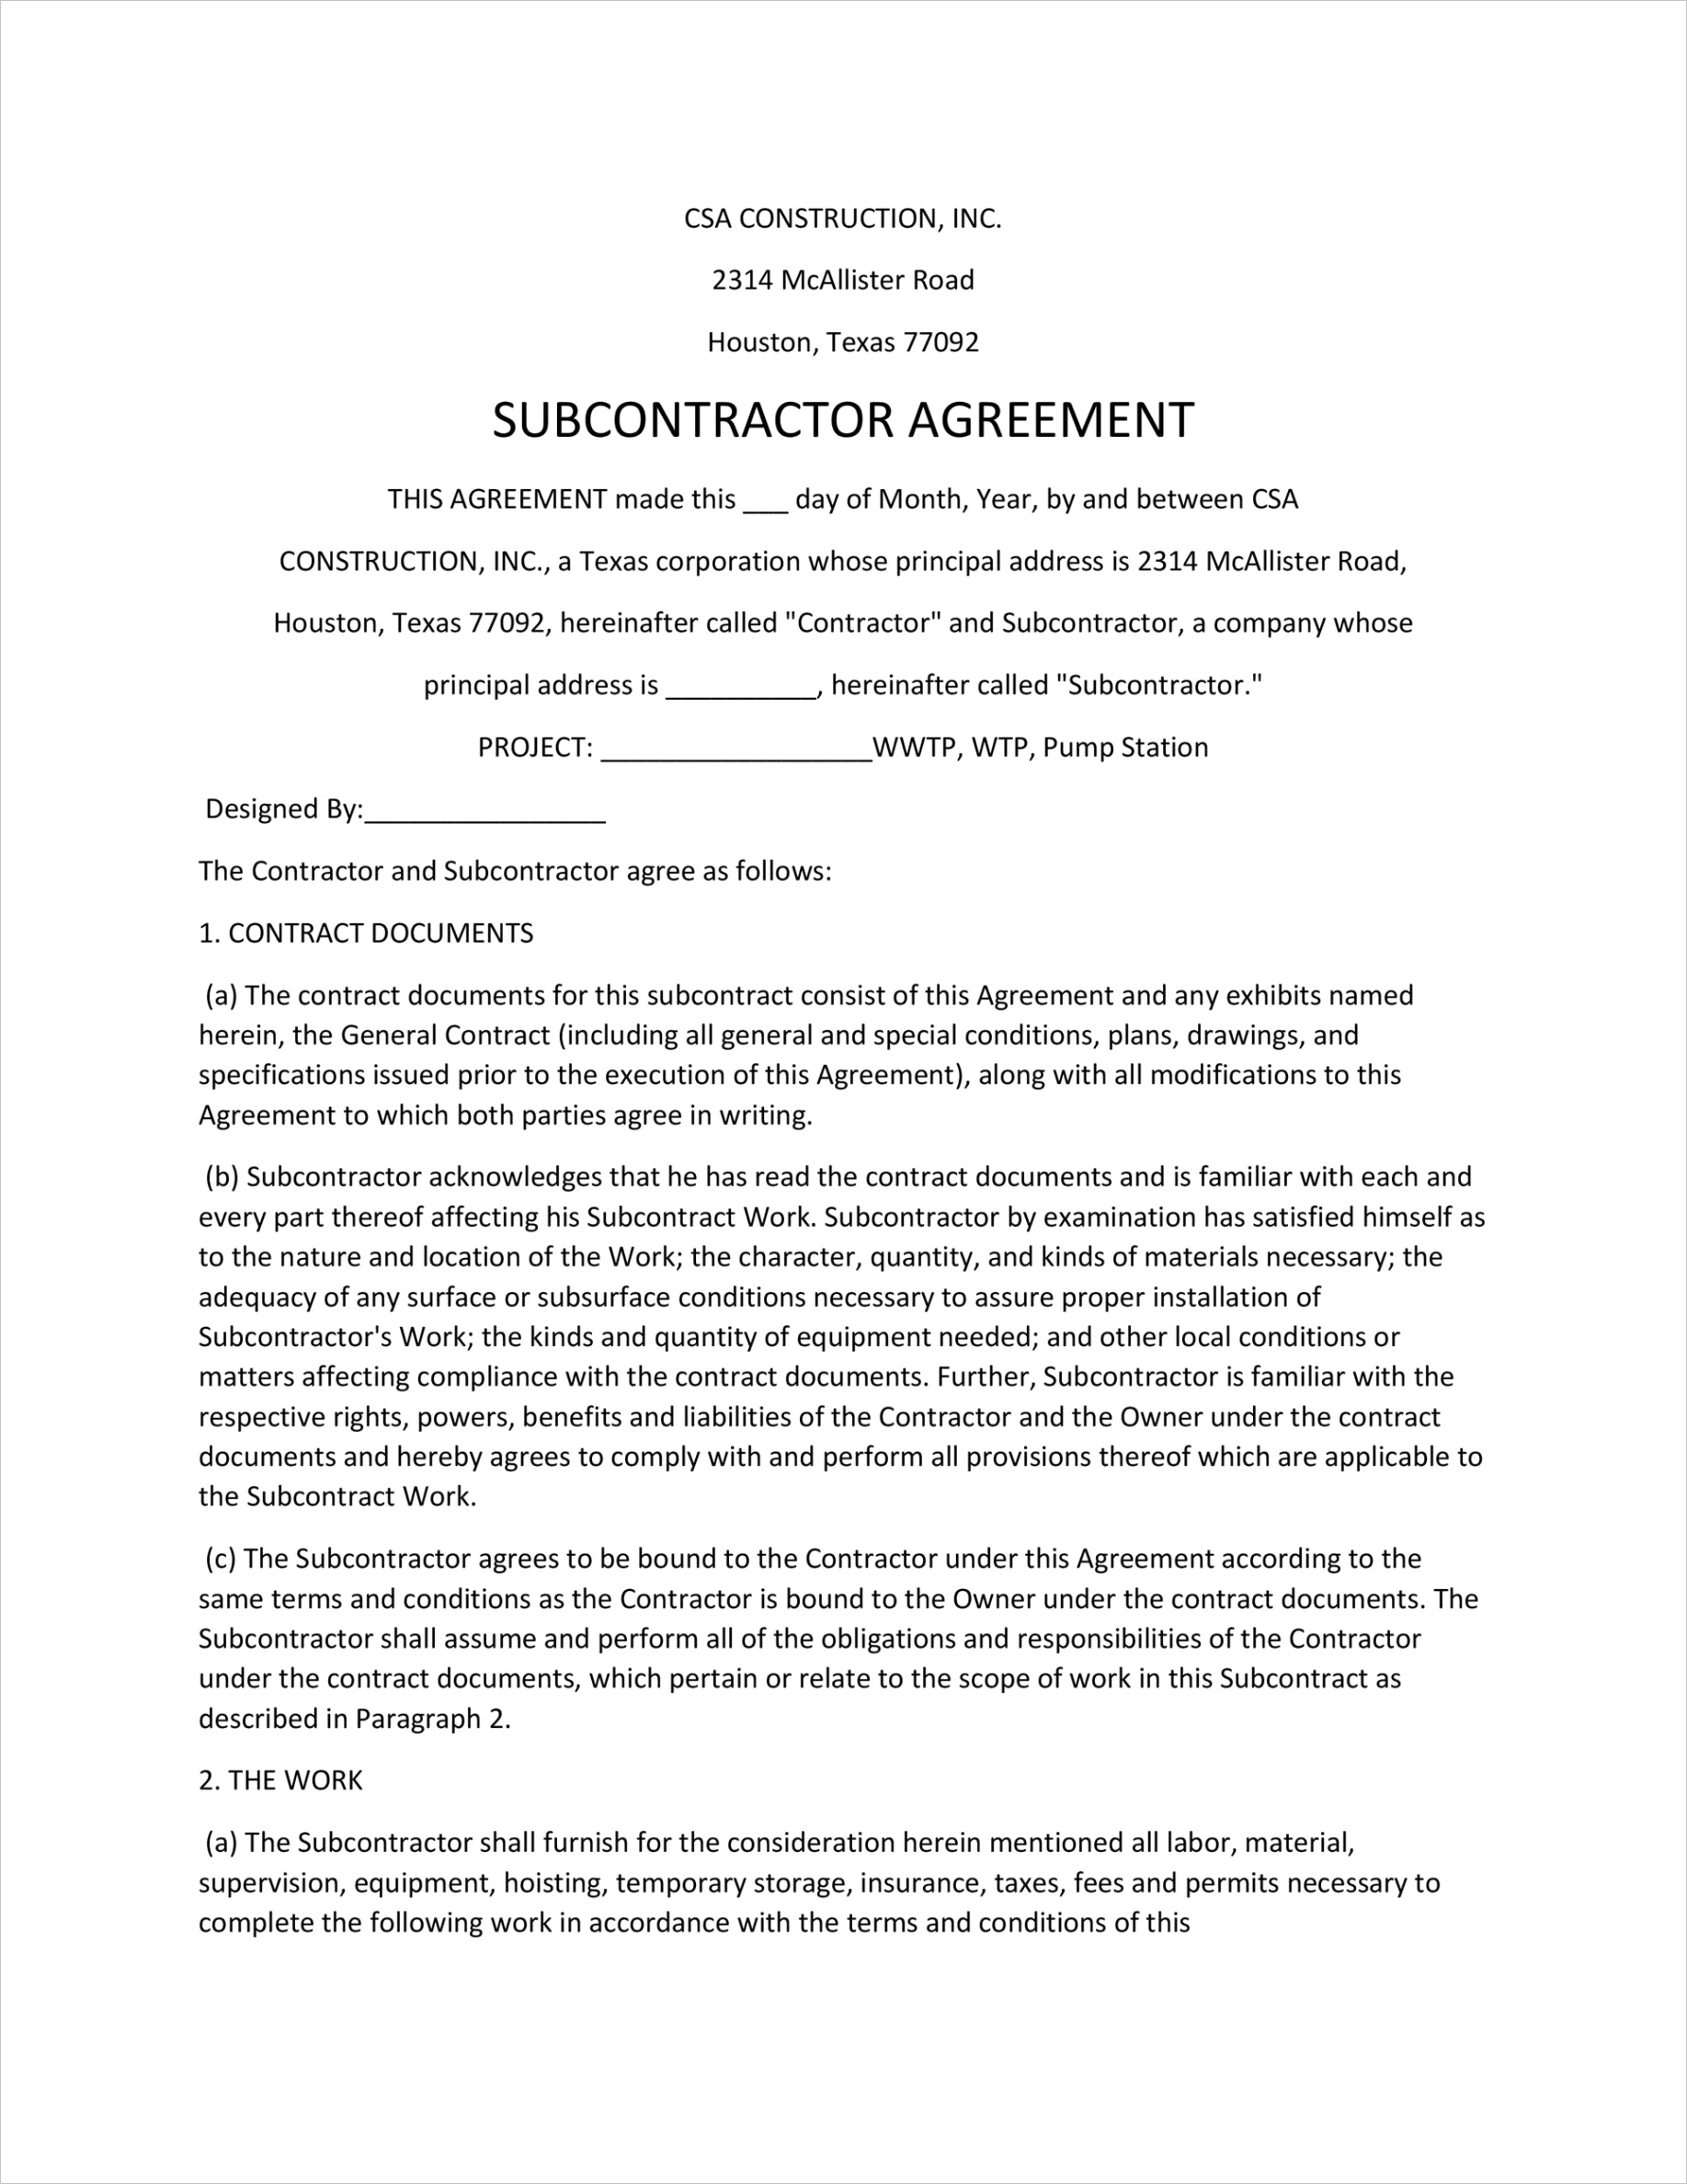 subcontractor agreement